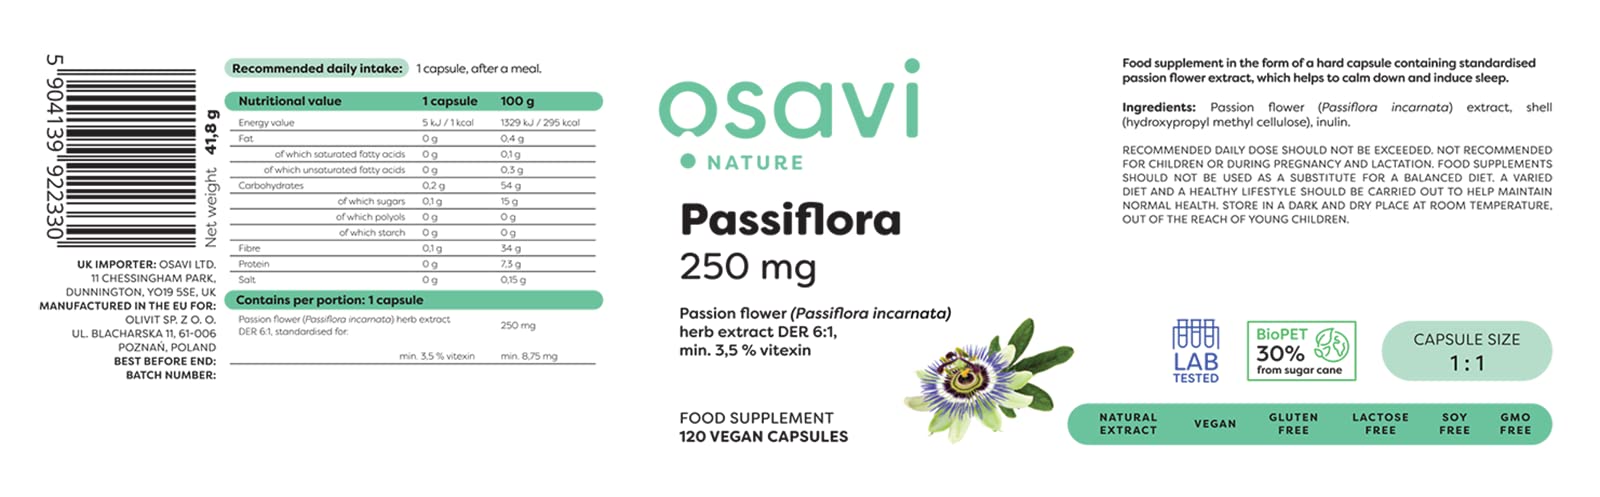 Osavi Passiflora, 250mg - 120 vegan caps | High-Quality Combination Multivitamins & Minerals | MySupplementShop.co.uk